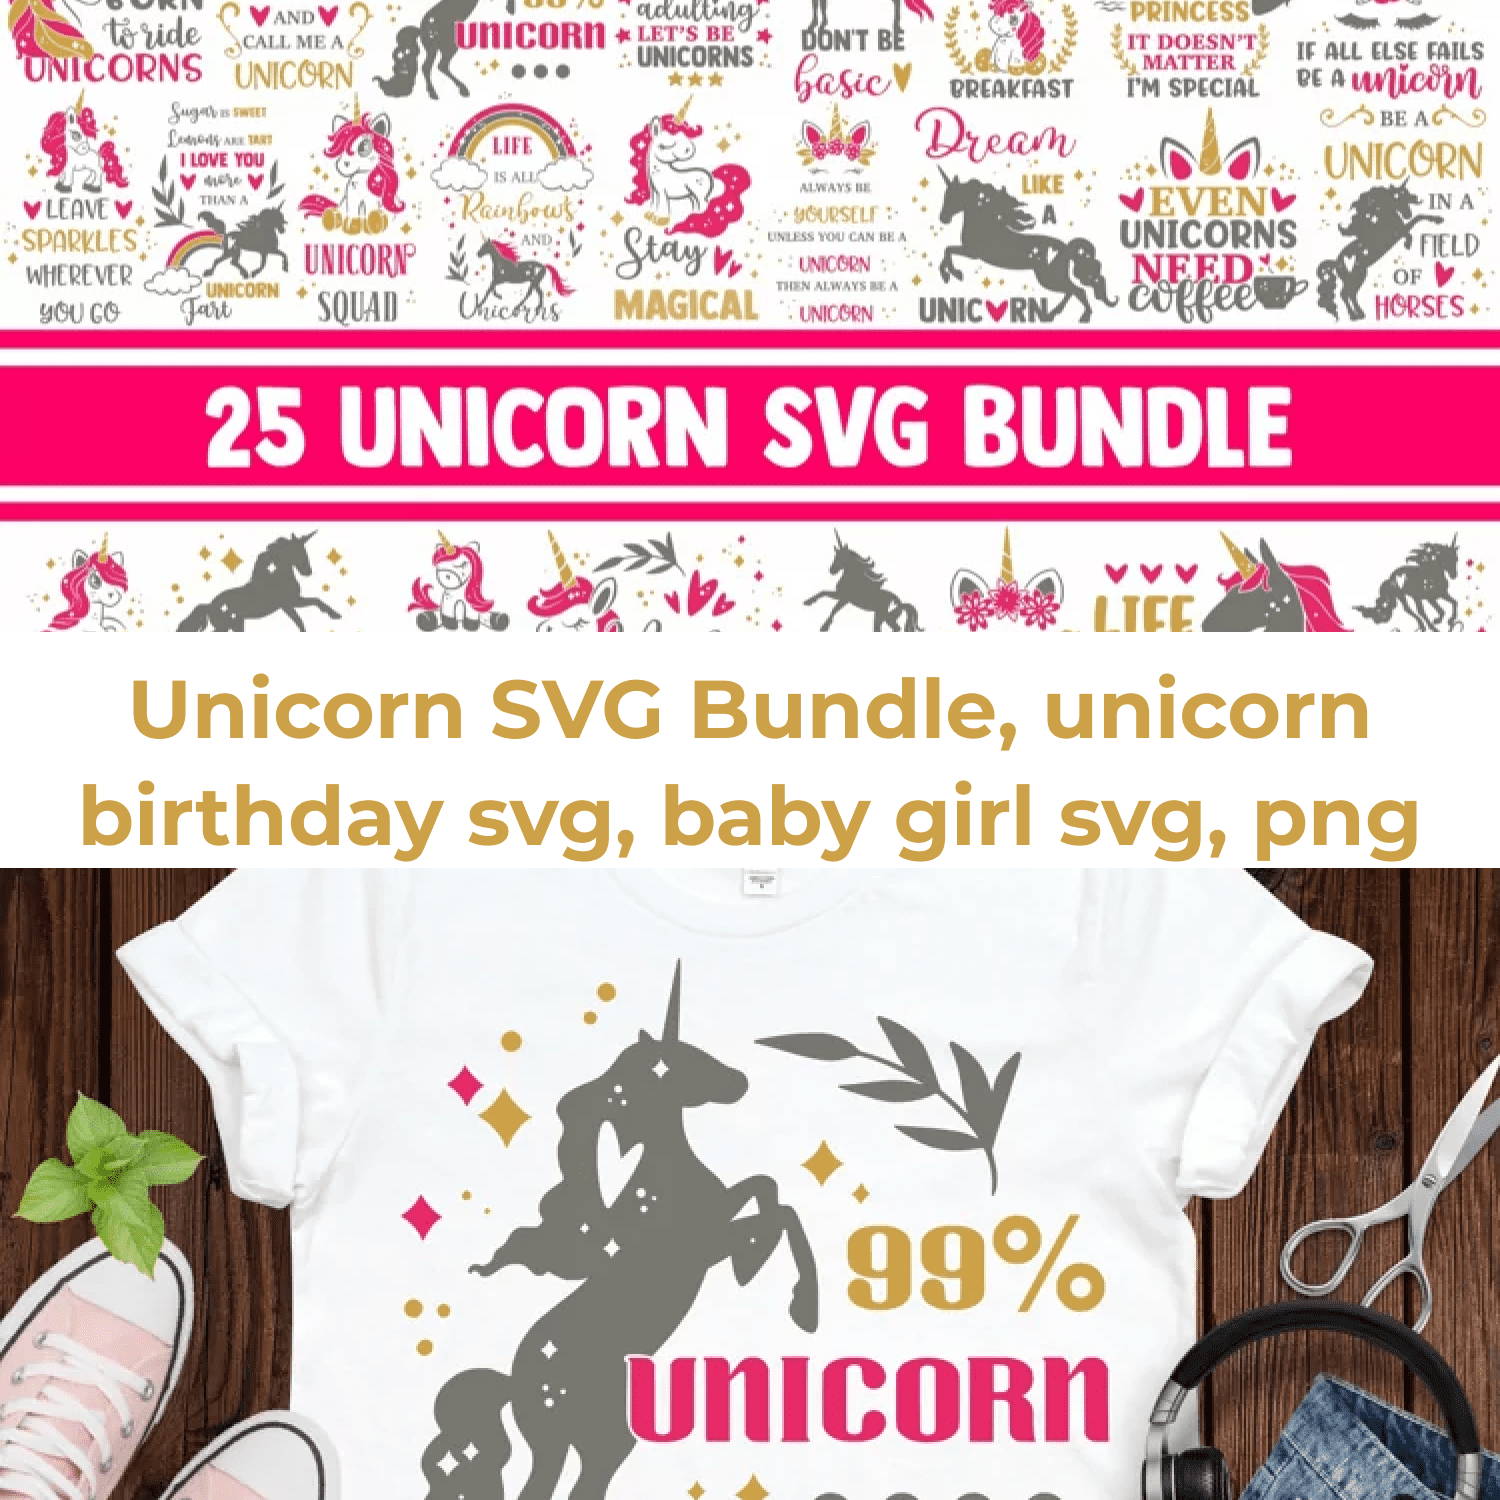 Unicorn SVG Bundle, unicorn birthday svg, baby girl cover.